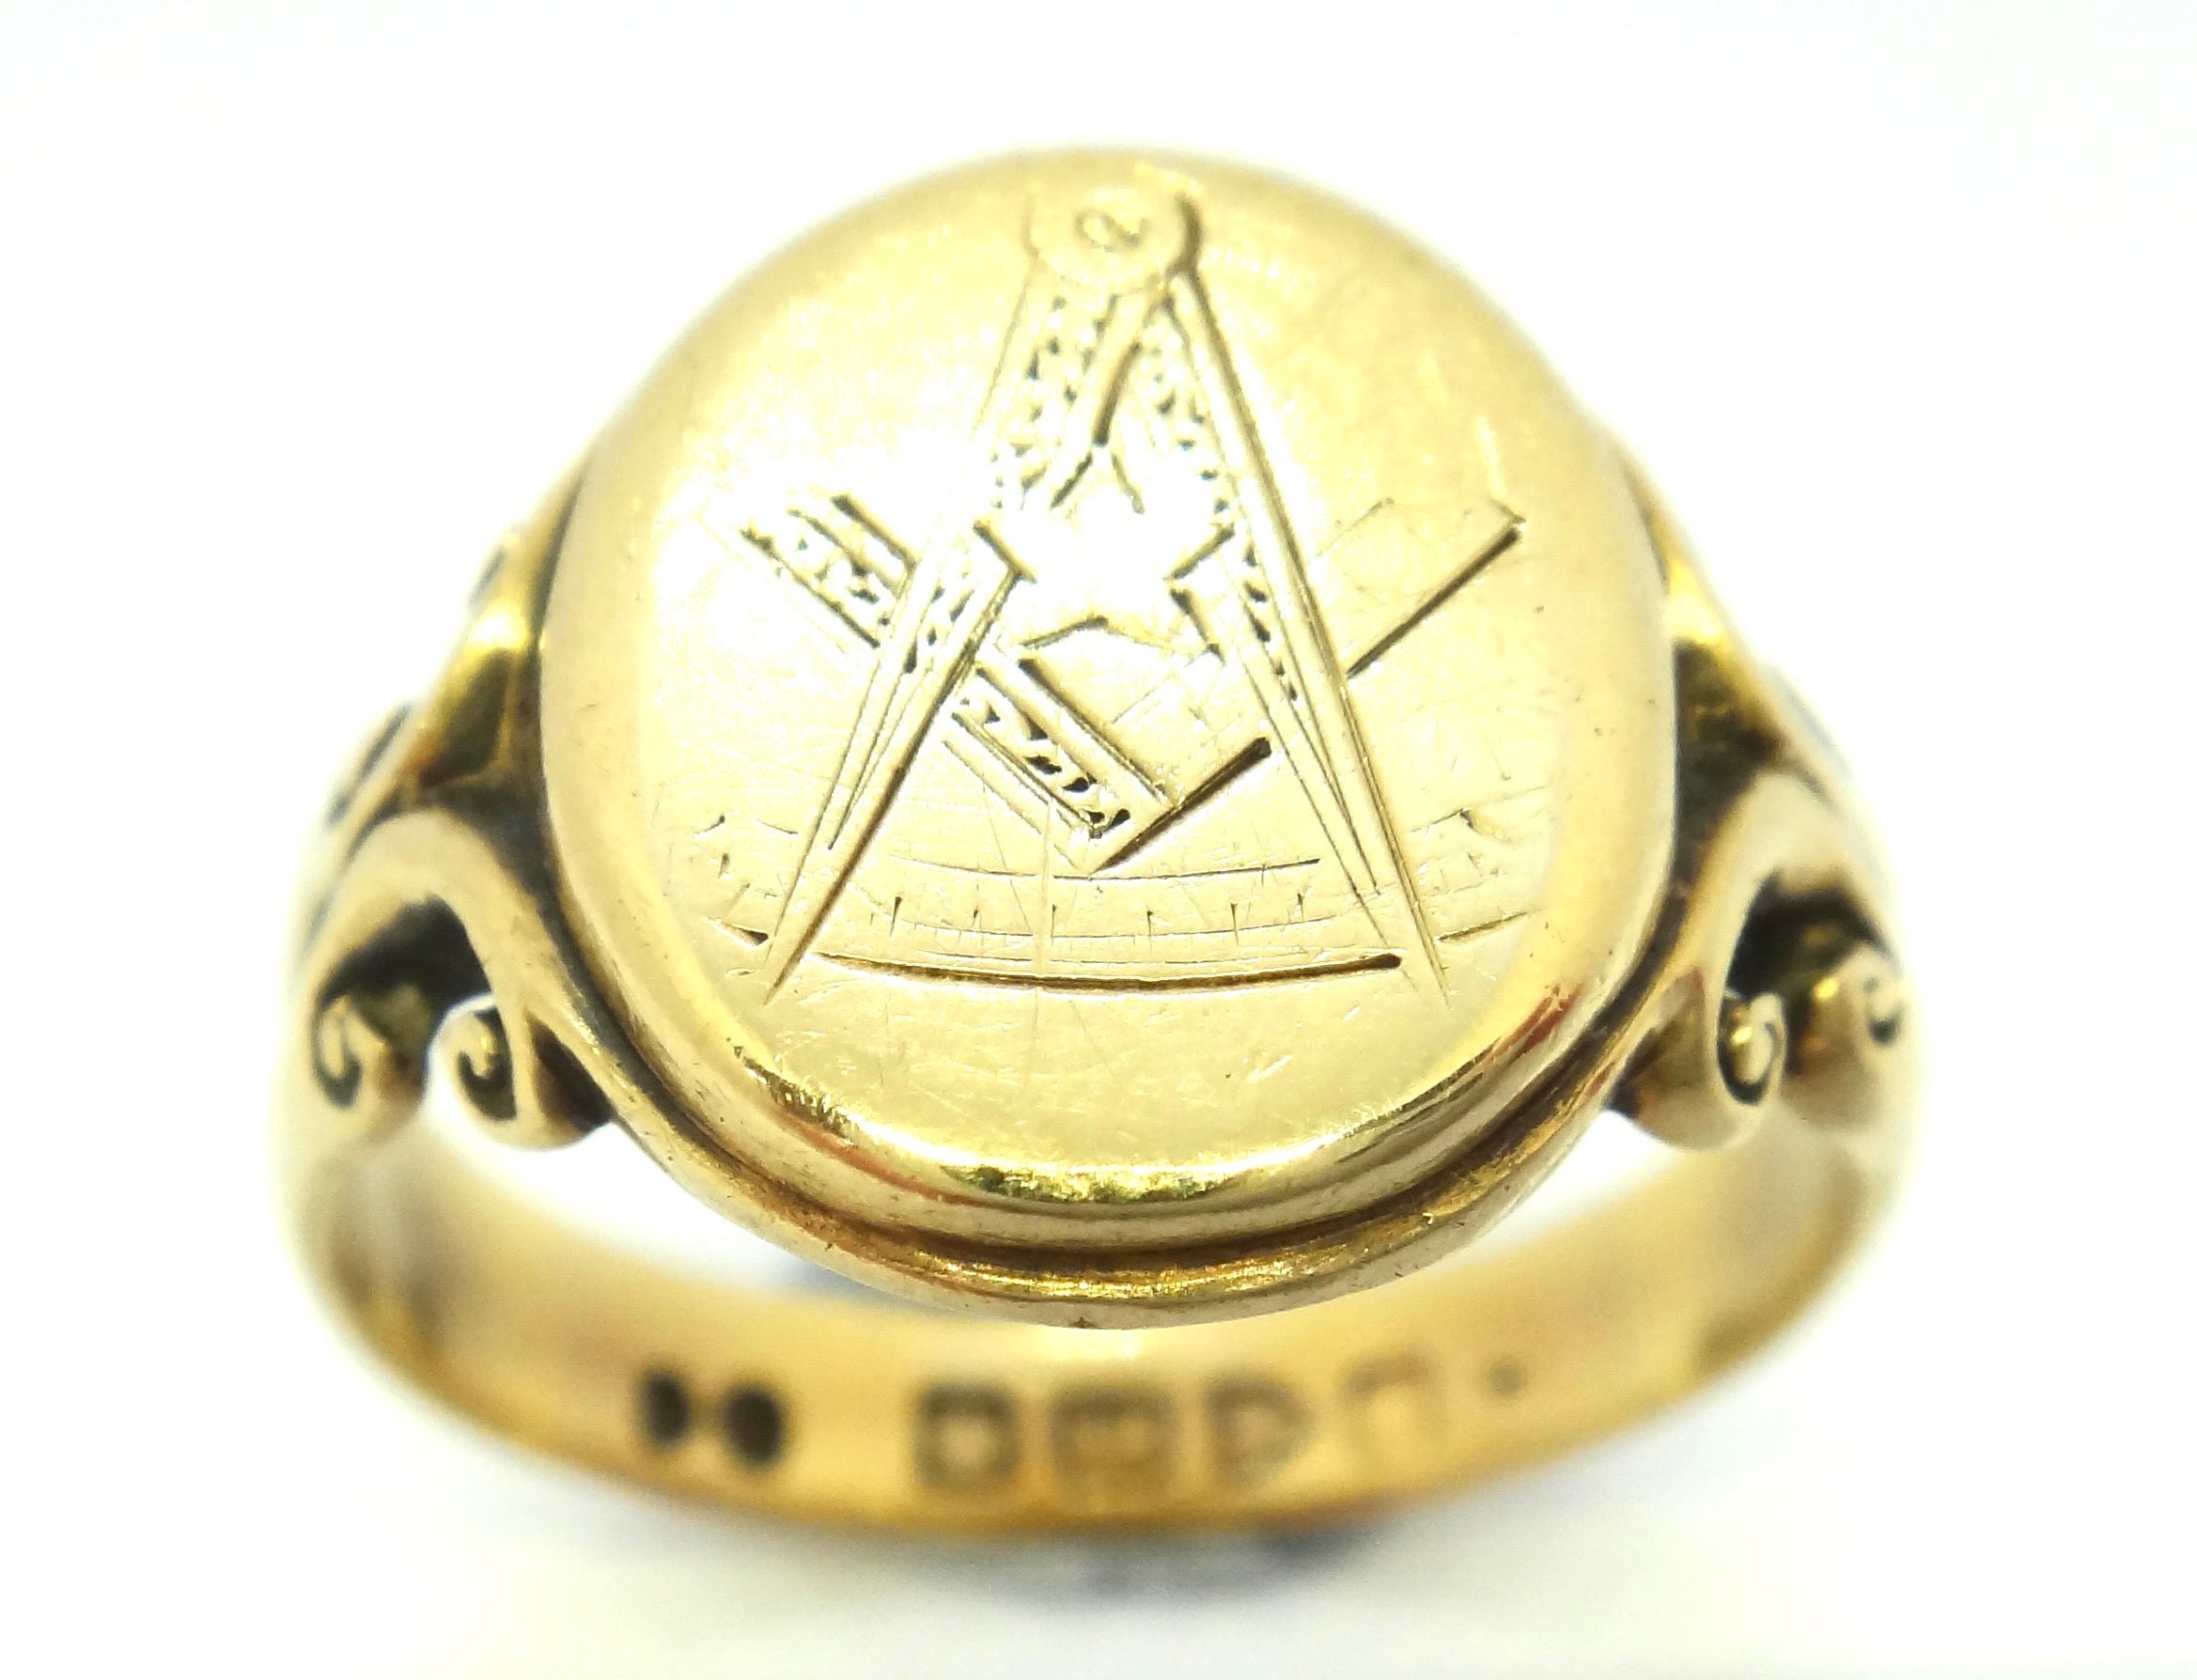 ANTIQUE 18ct Yellow Gold MASONIC Signet Ring, Chester c.1908